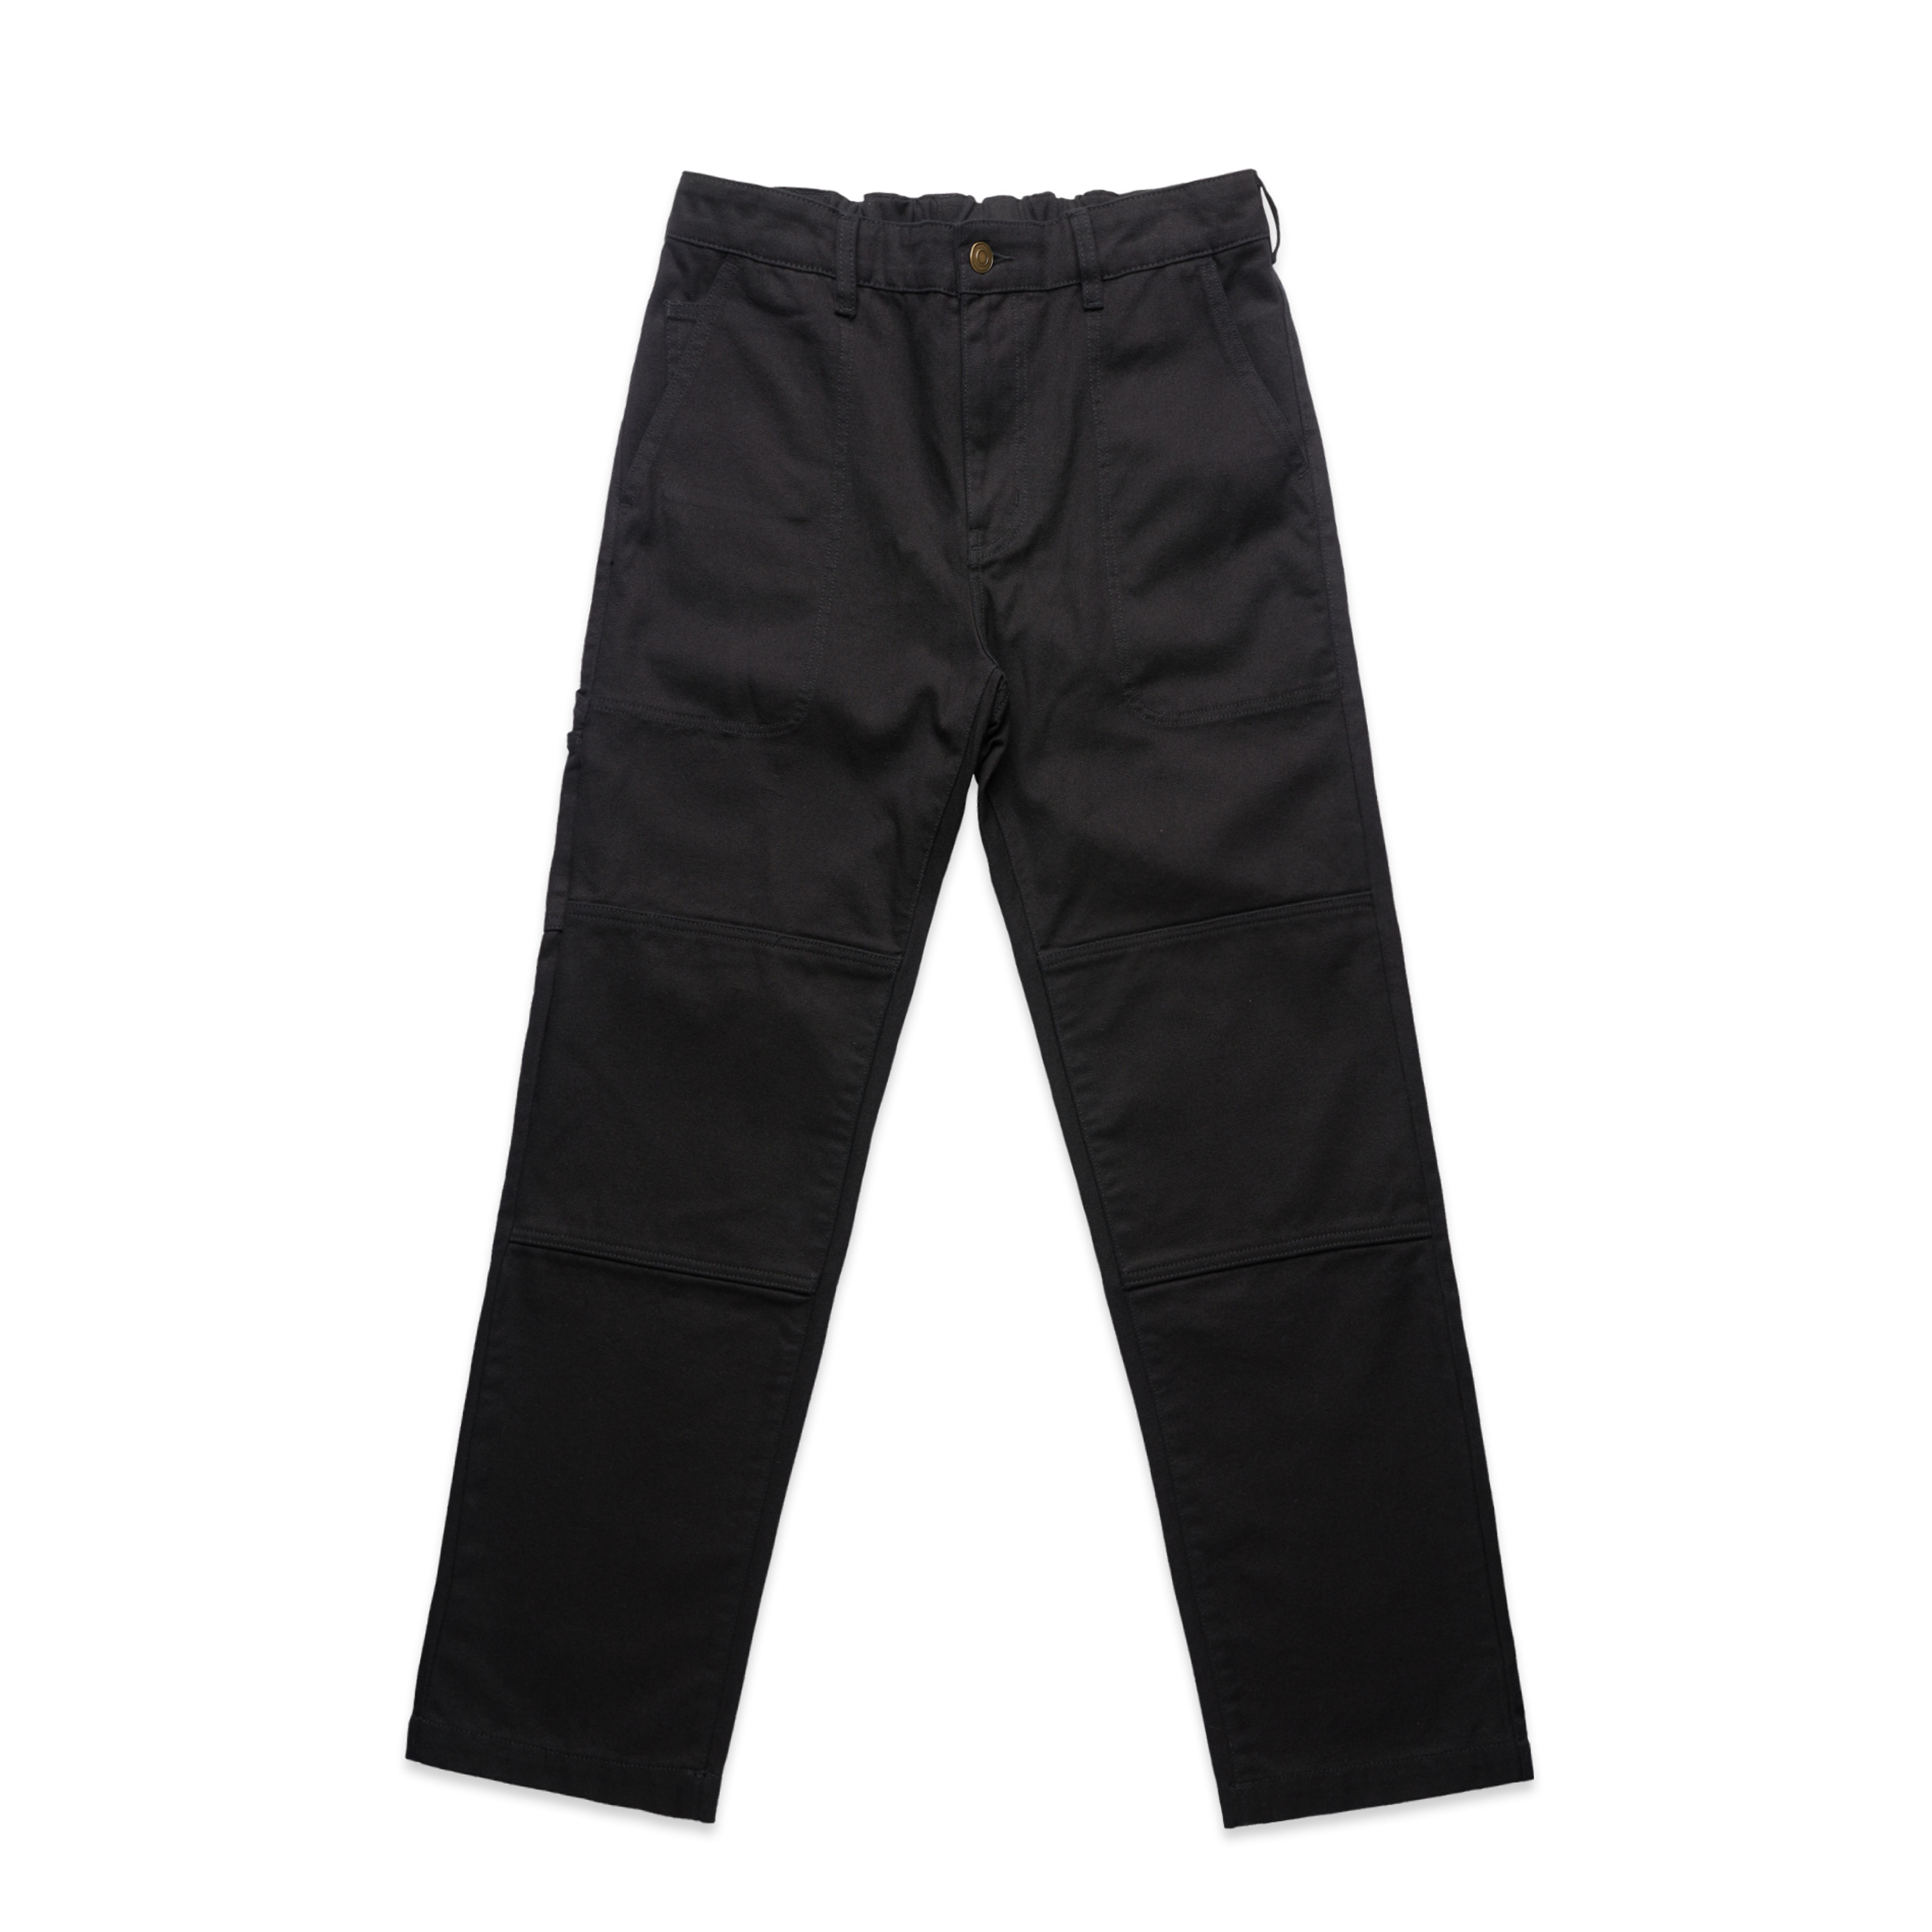 ALASKA ENZYME CANVAS Trousers BLACK from Non-Sens 68 EUR